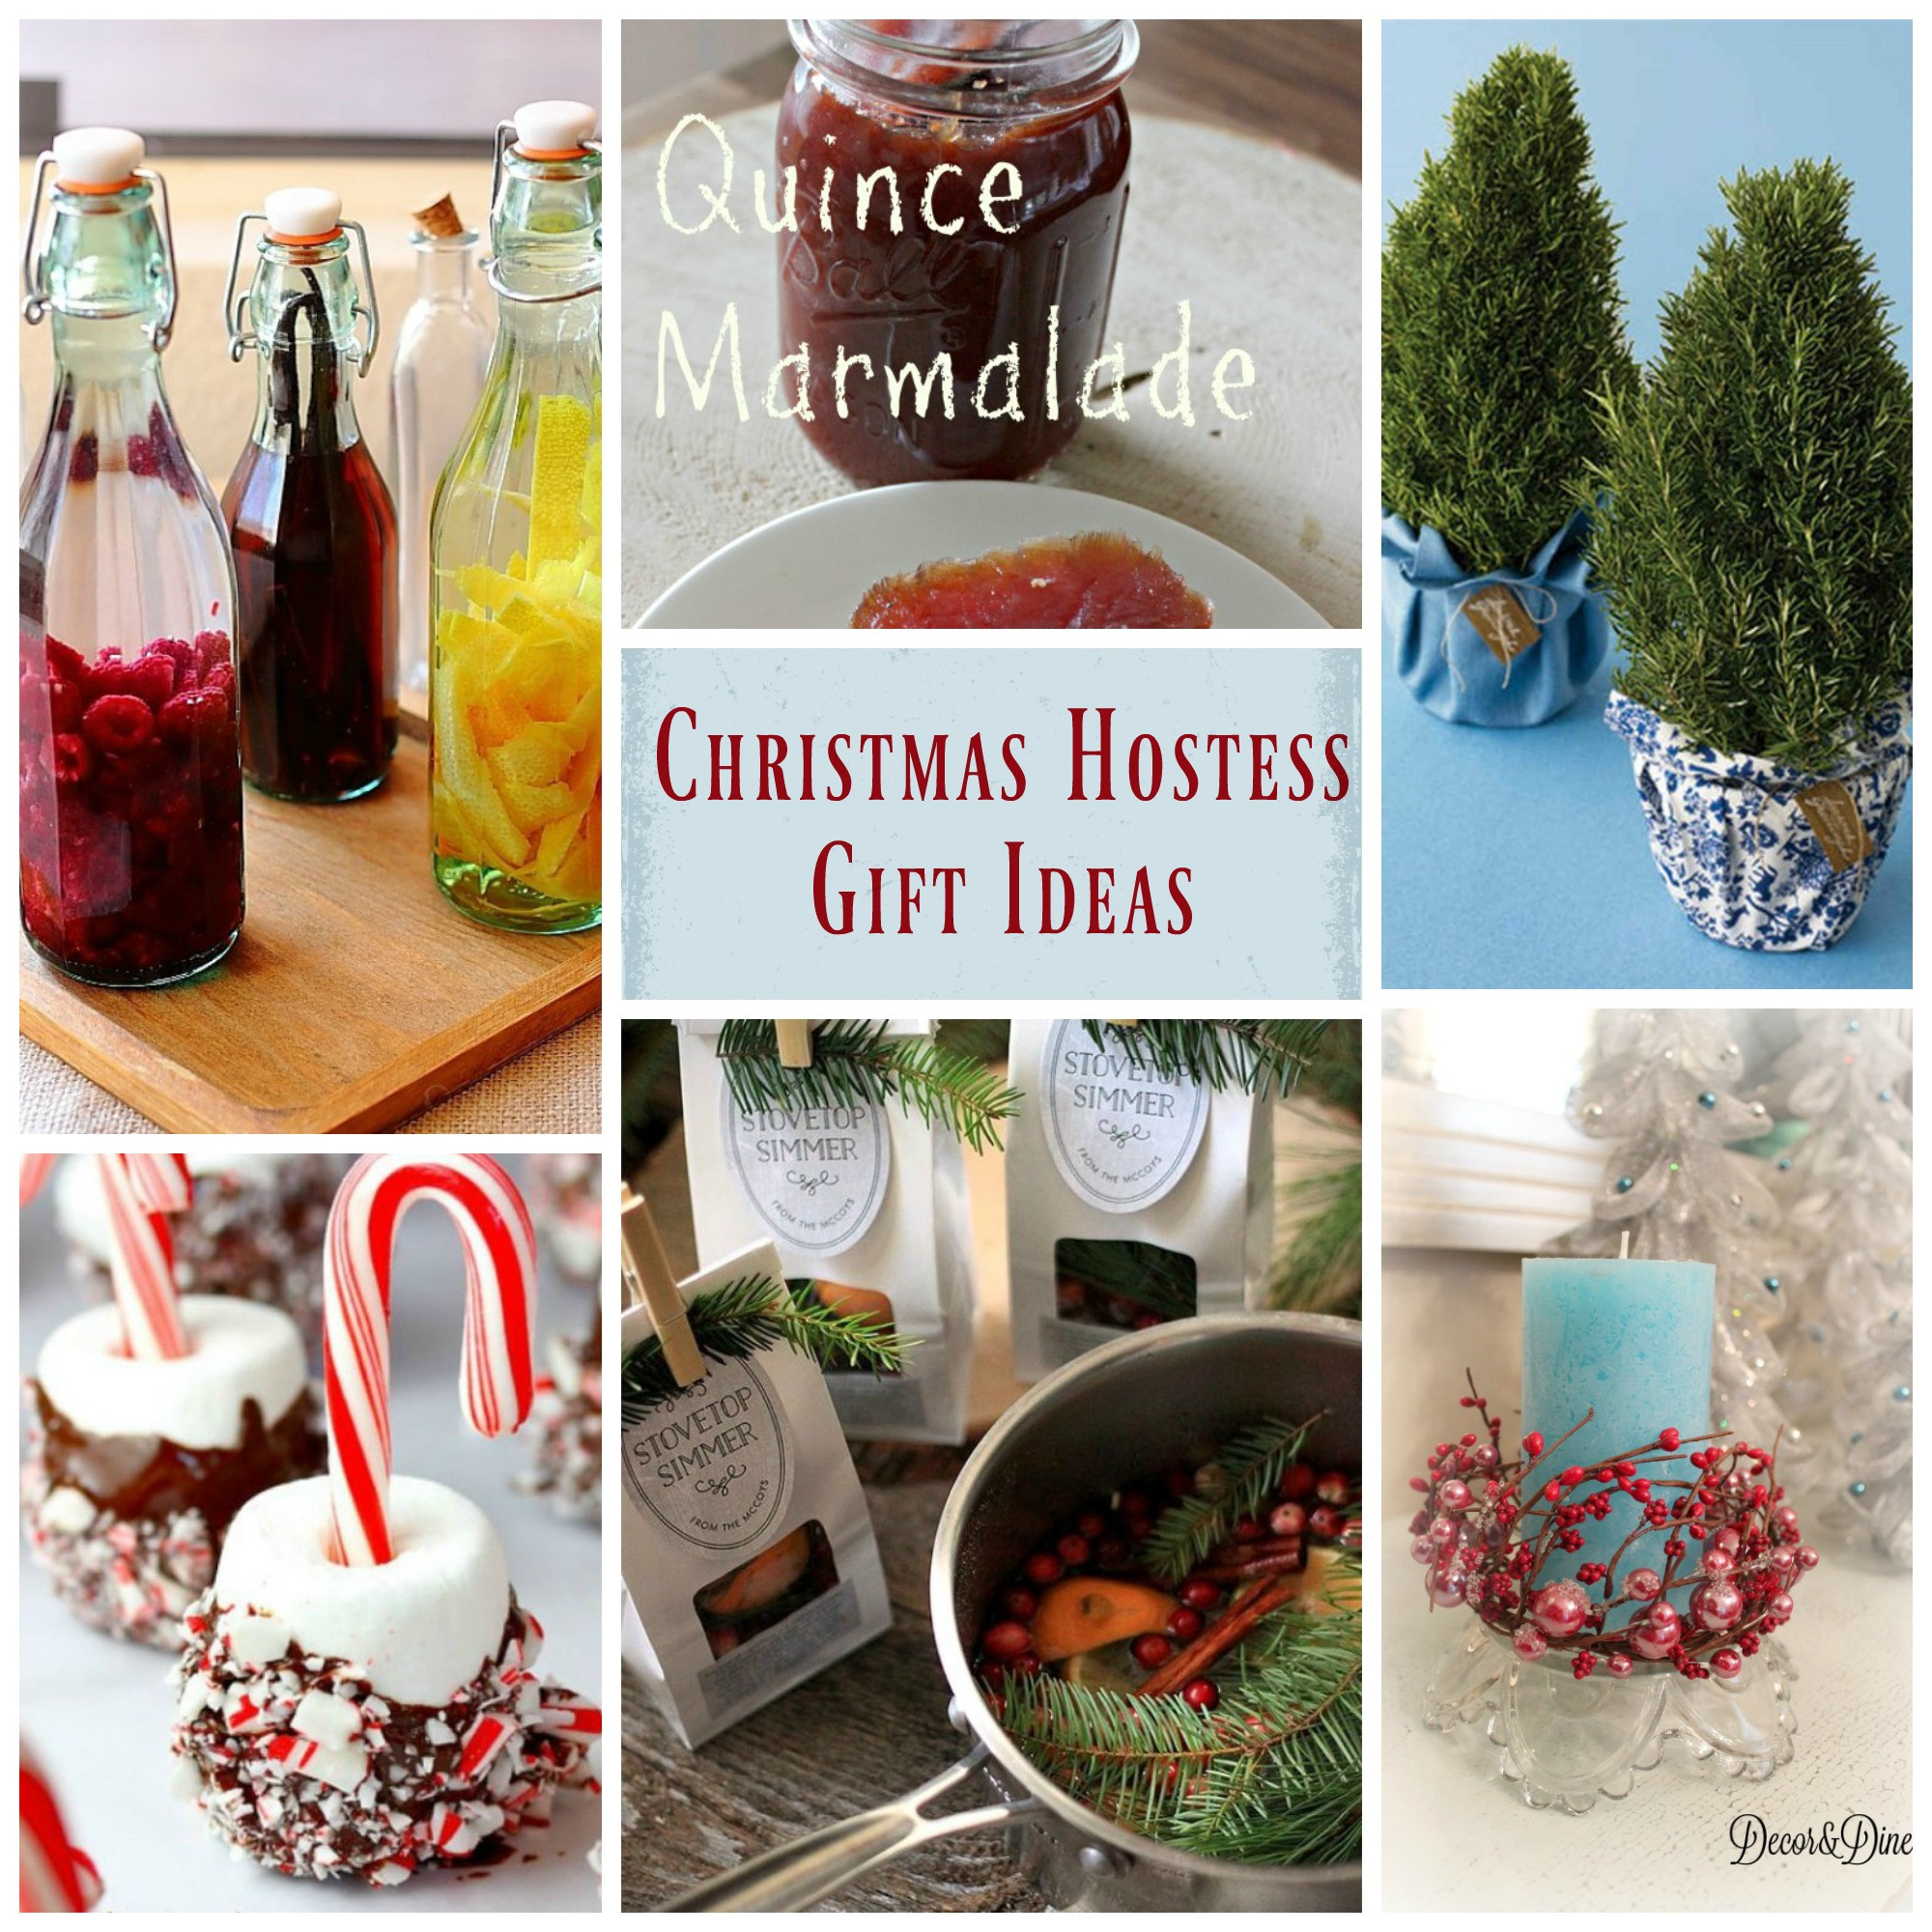 Christmas Party Host Gift Ideas
 Christmas Hostess Gift Ideas